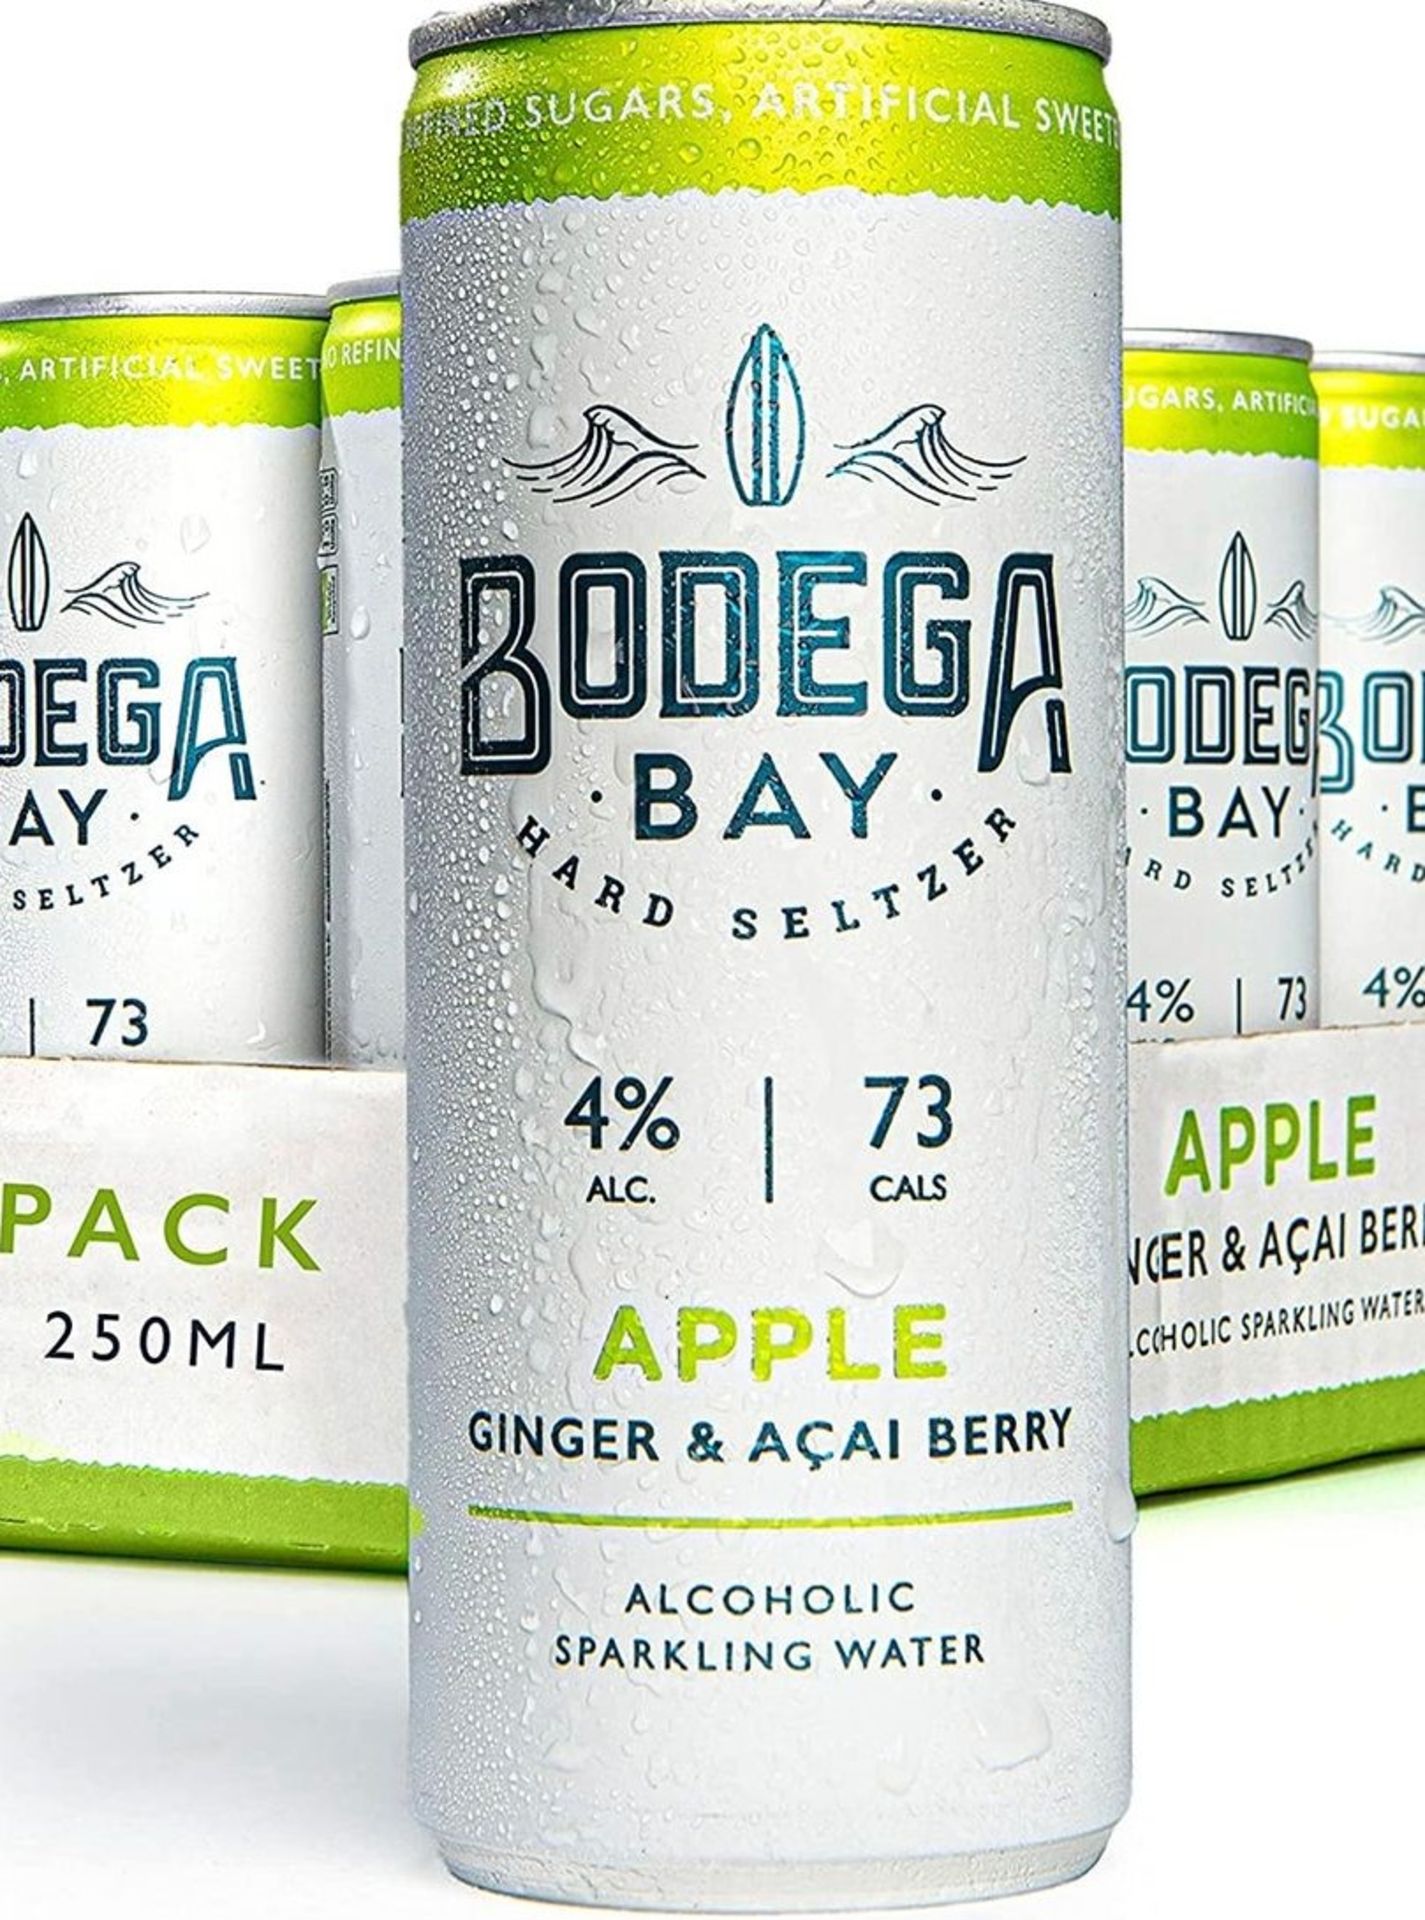 90 x Bodega Bay Hard Seltzer 250ml Alcoholic Sparkling Water Drinks - Apple Ginger & Acai Berry - 4% - Image 5 of 6